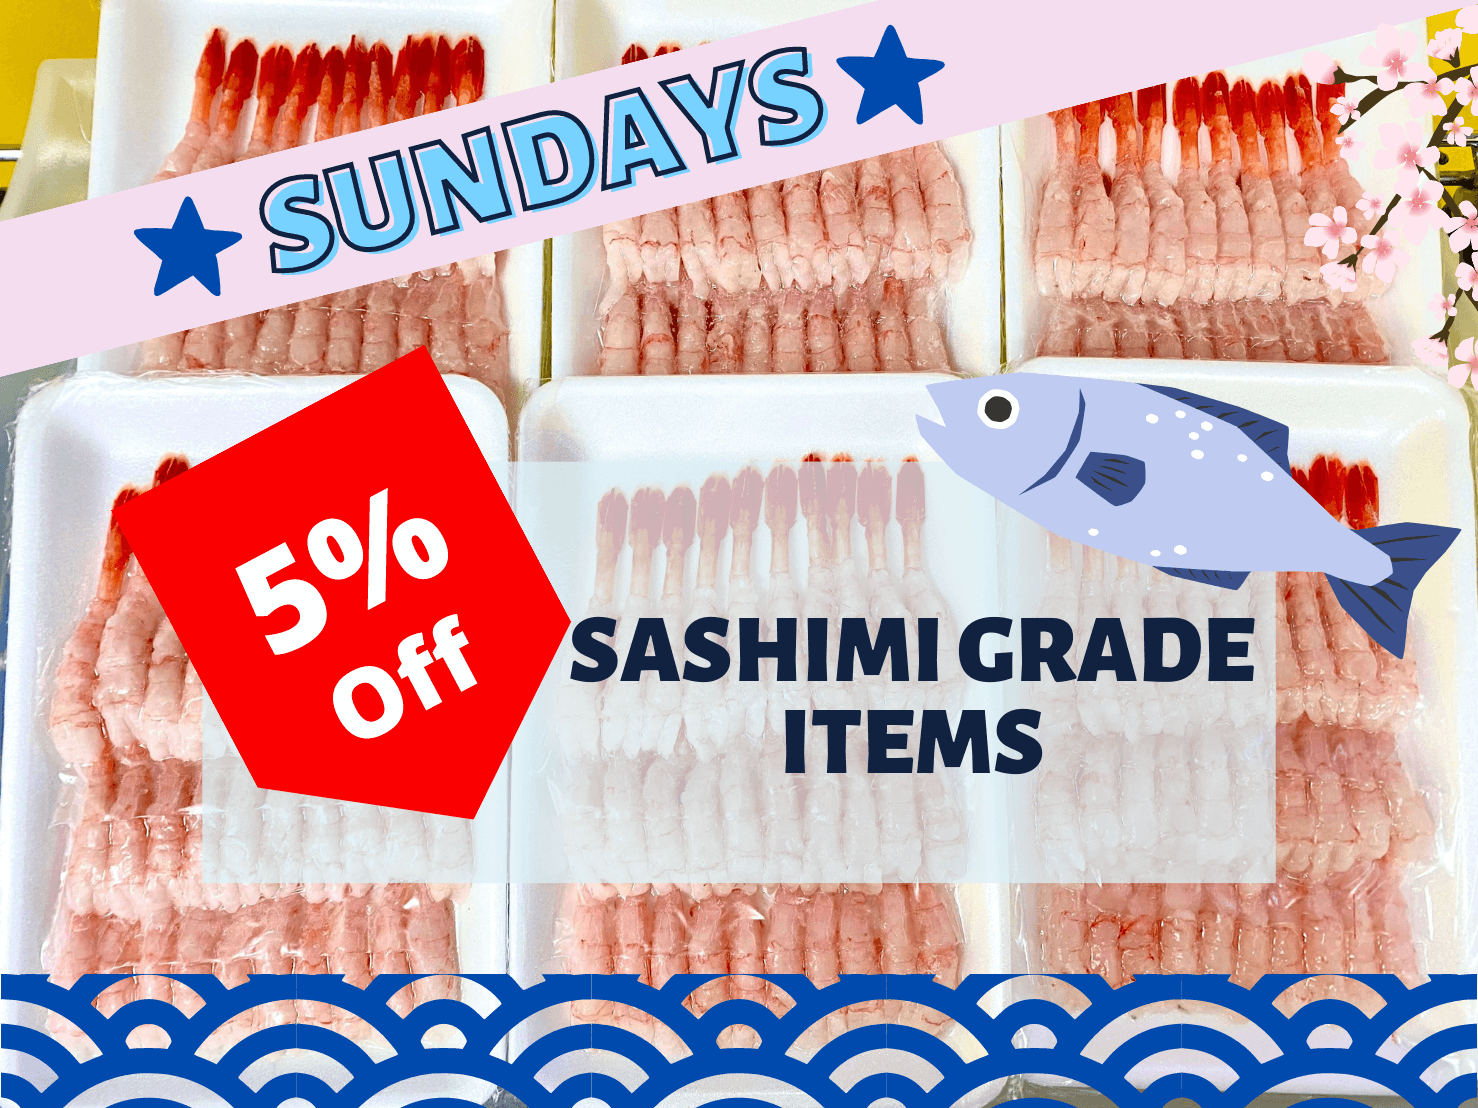 Sashimi Grade Items 5% off Sunday